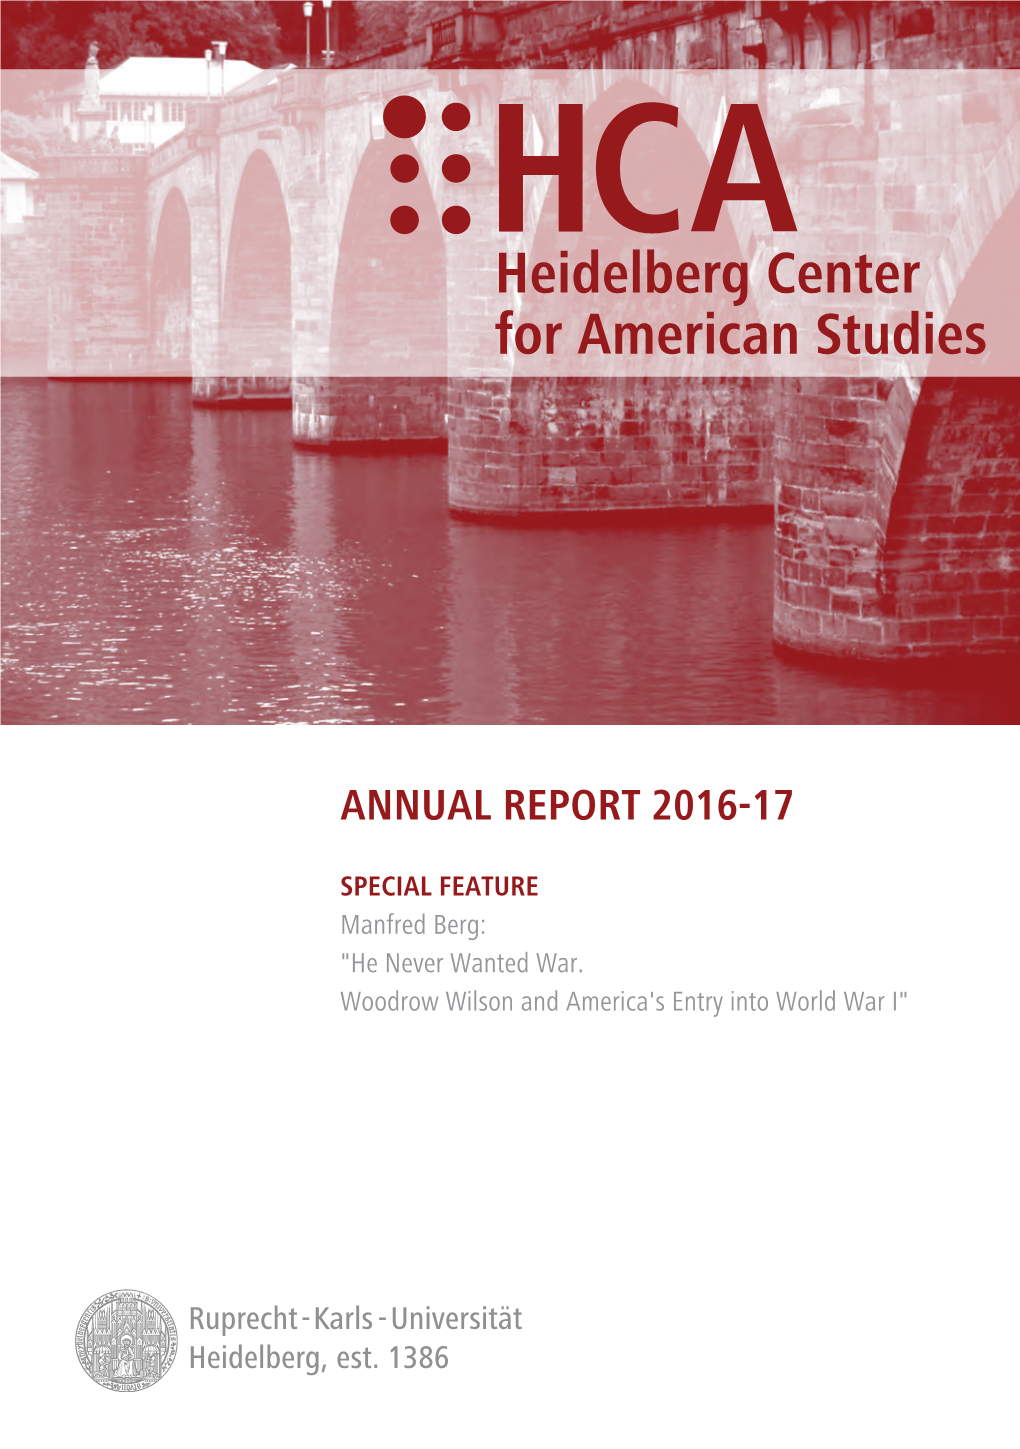 Annual Report 2016/2017